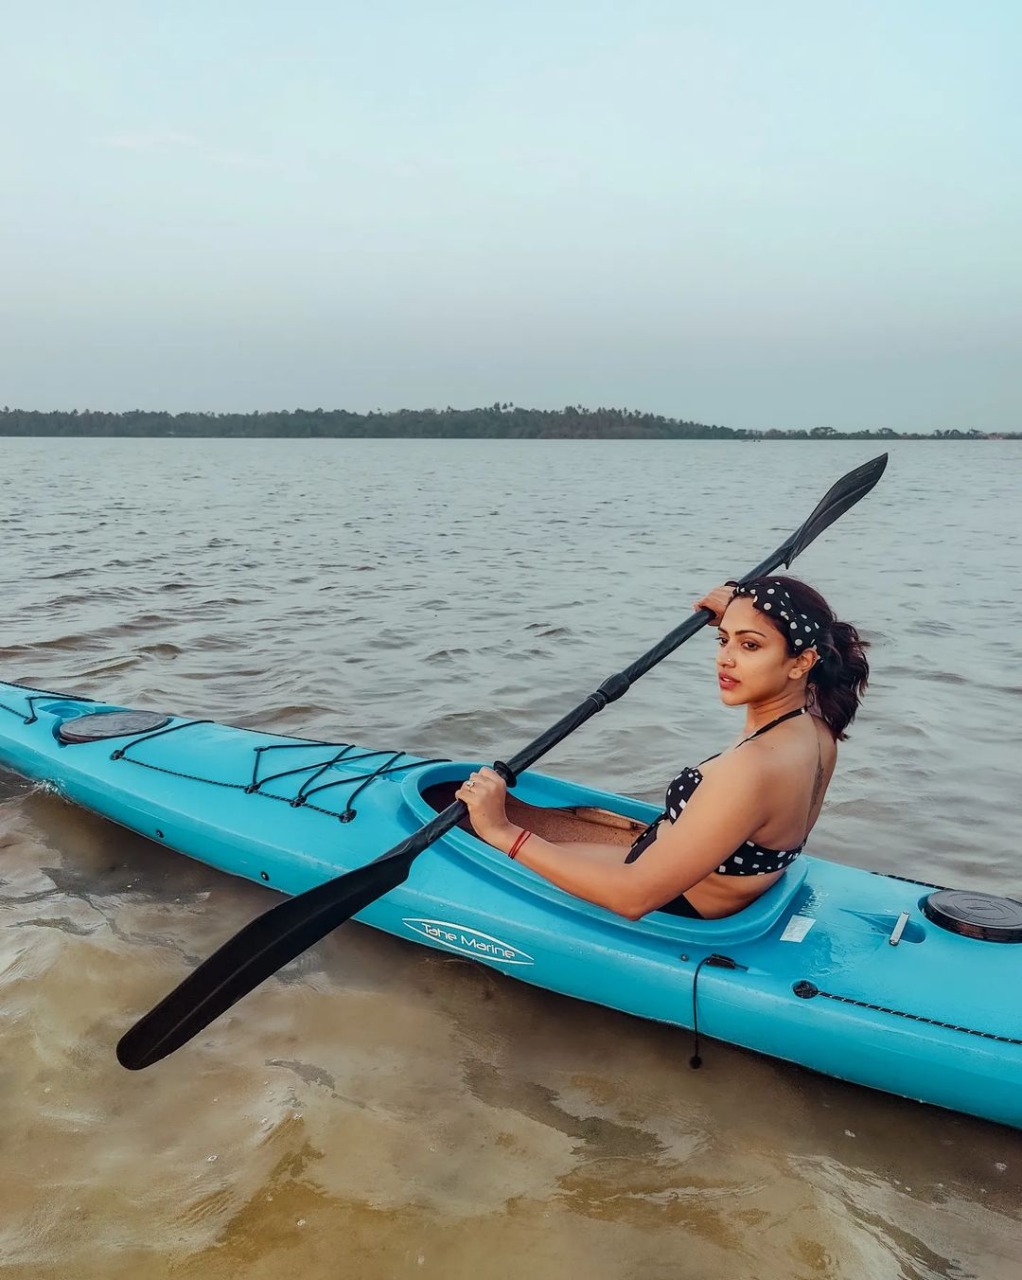 Amala Paul bikini images at back waters goes viral